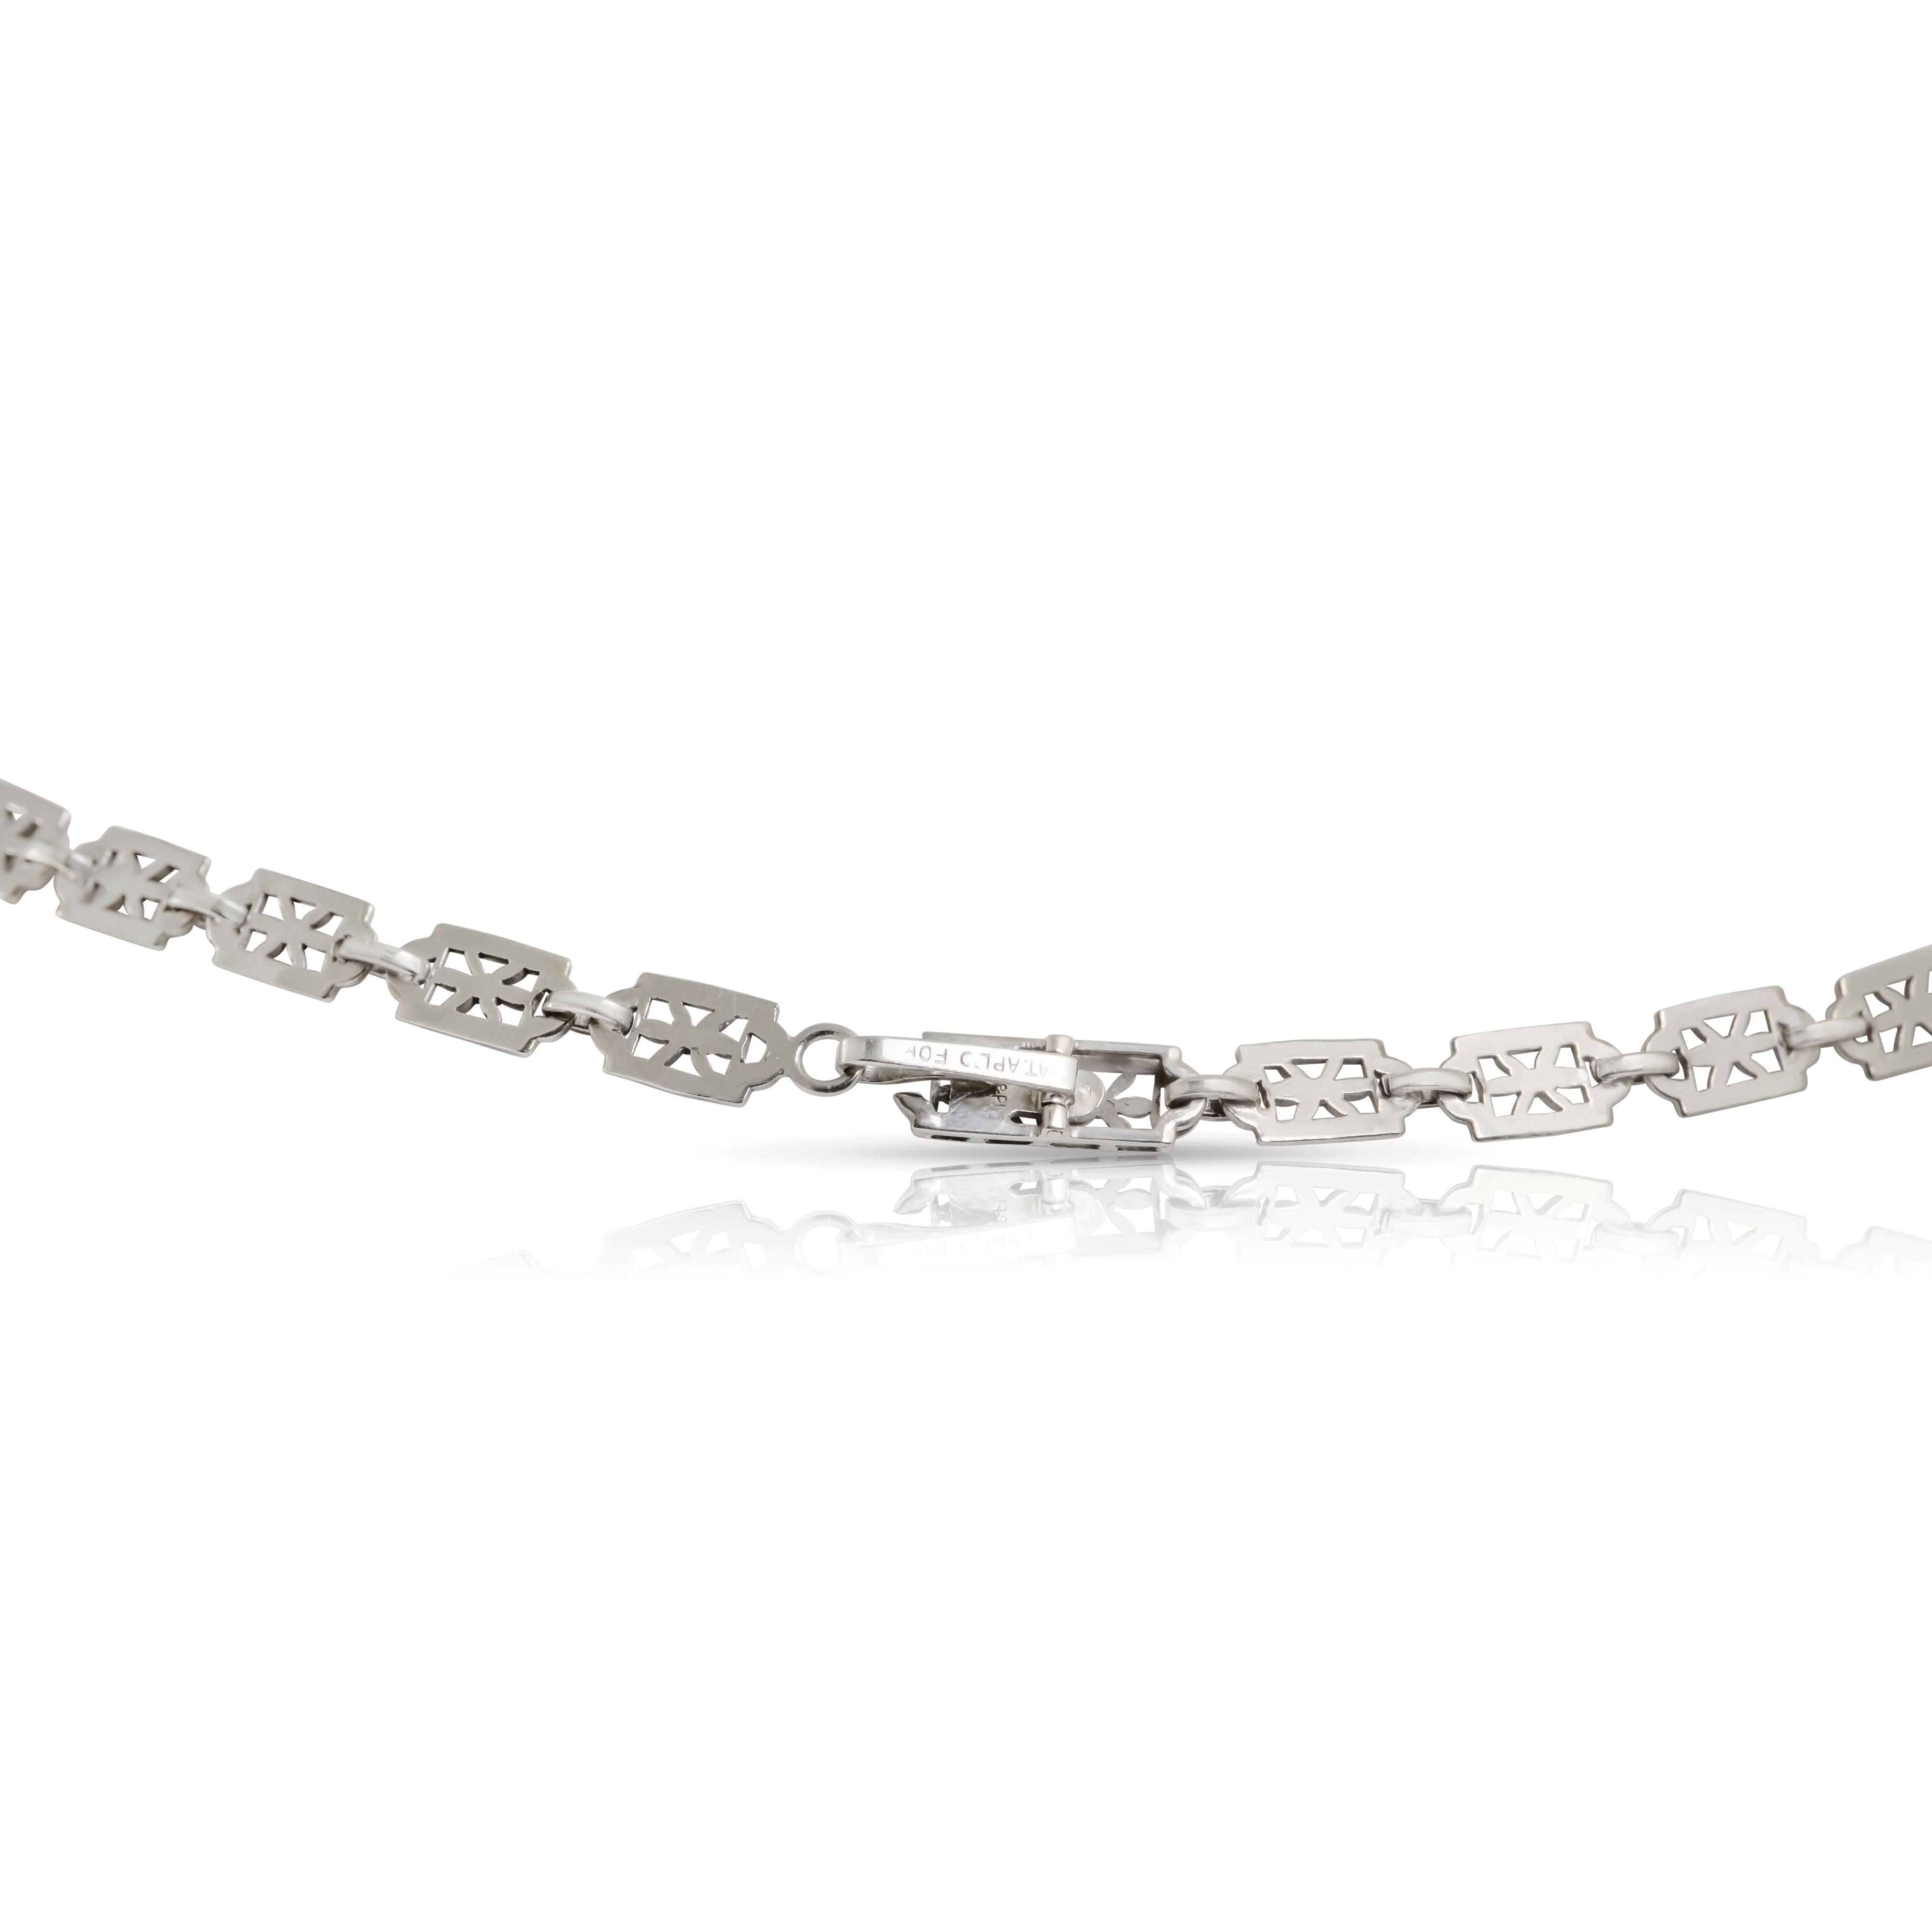 Platinum filigree chain on Art Deco necklace.